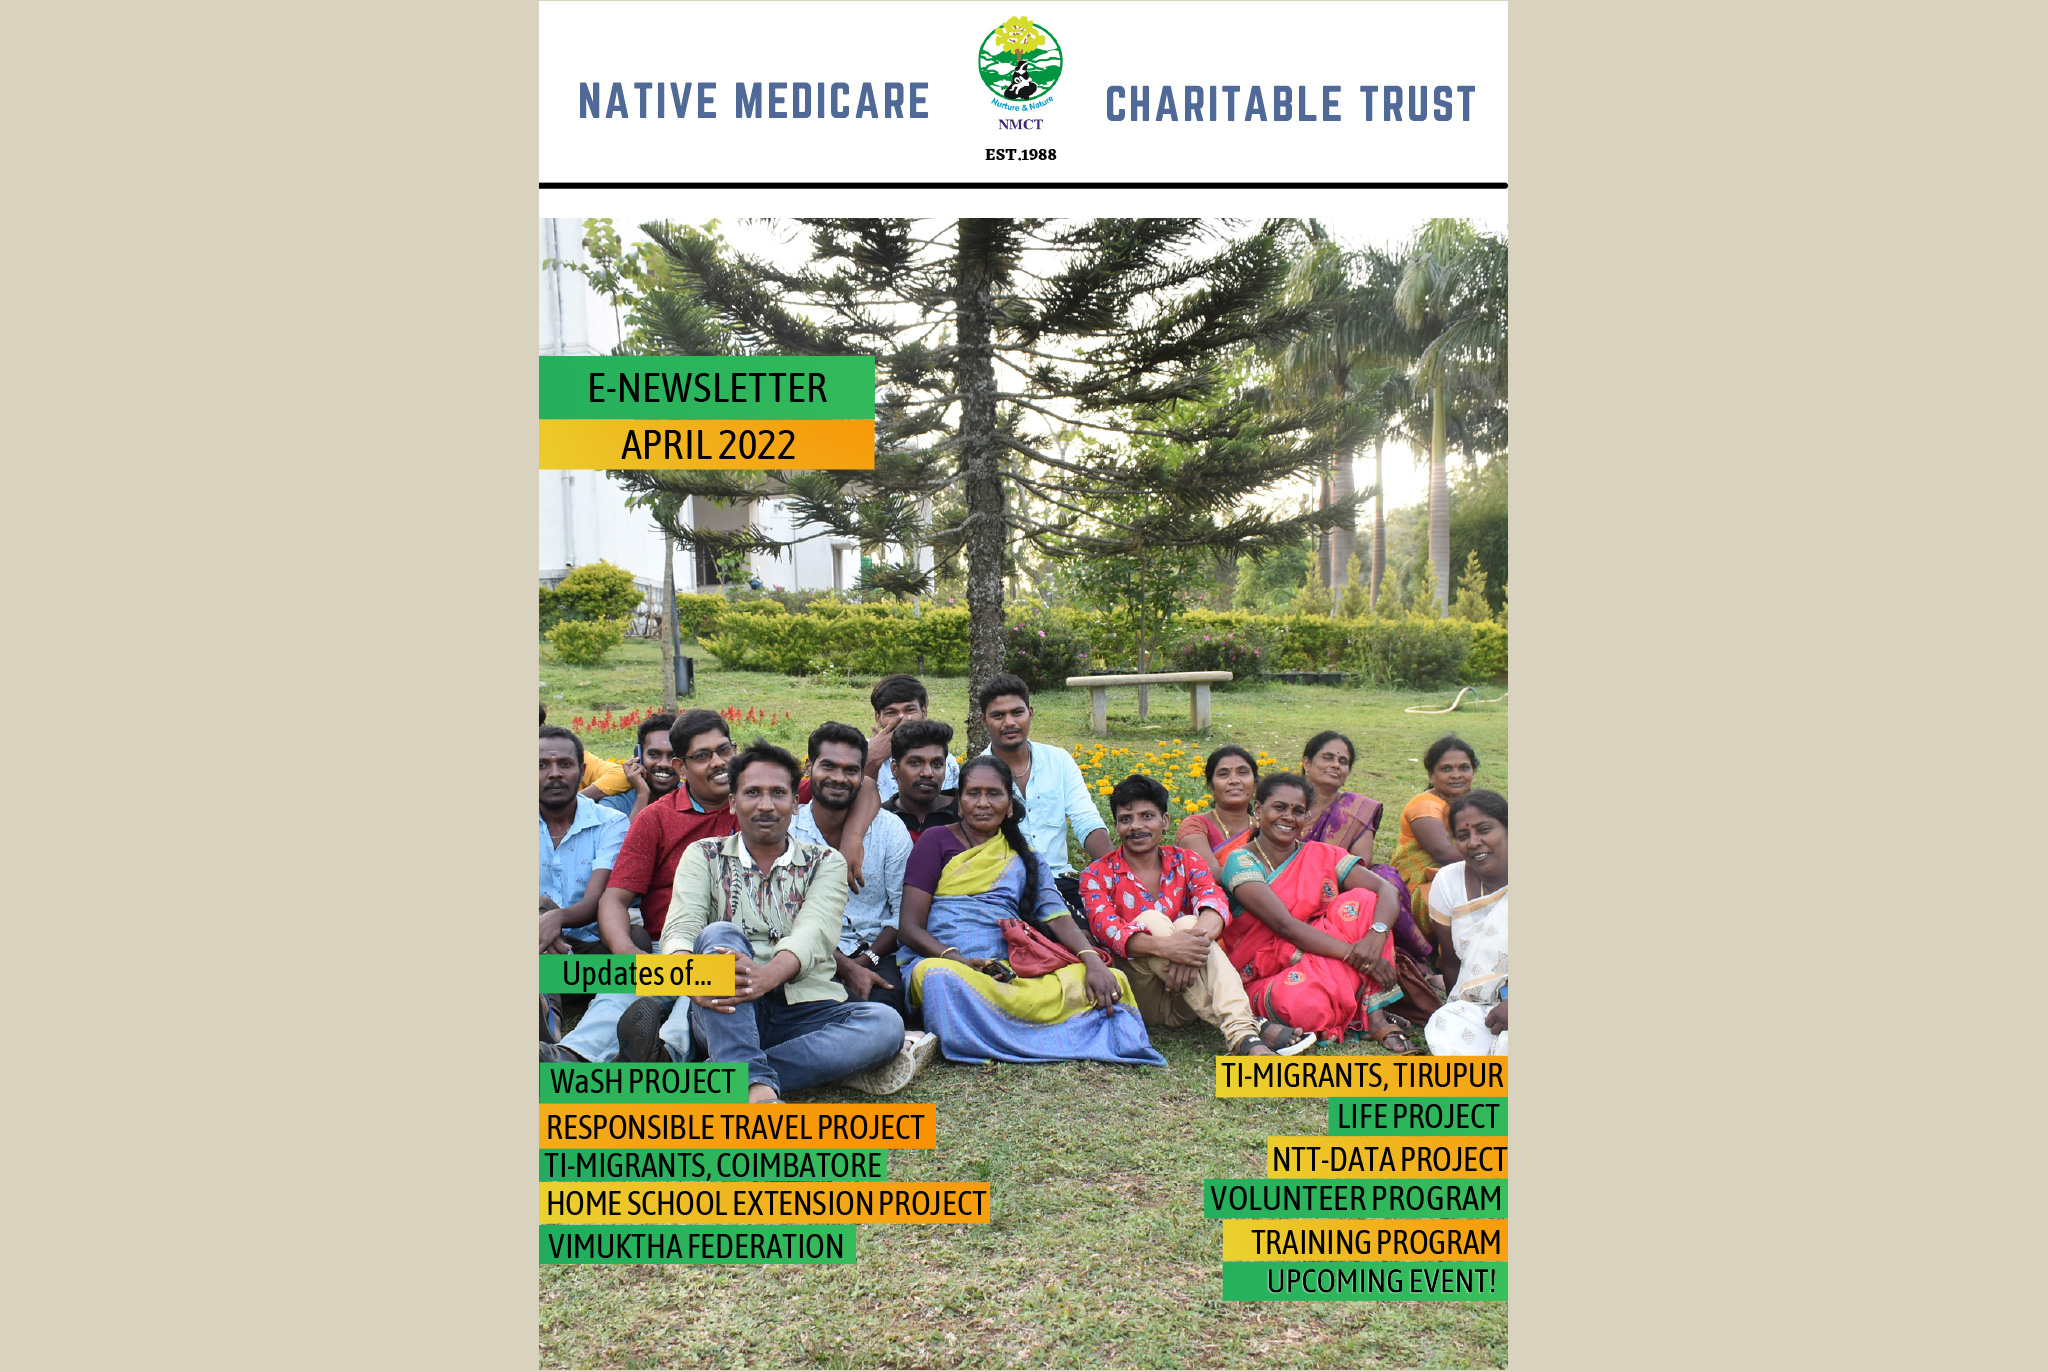  NMCT Annual Report